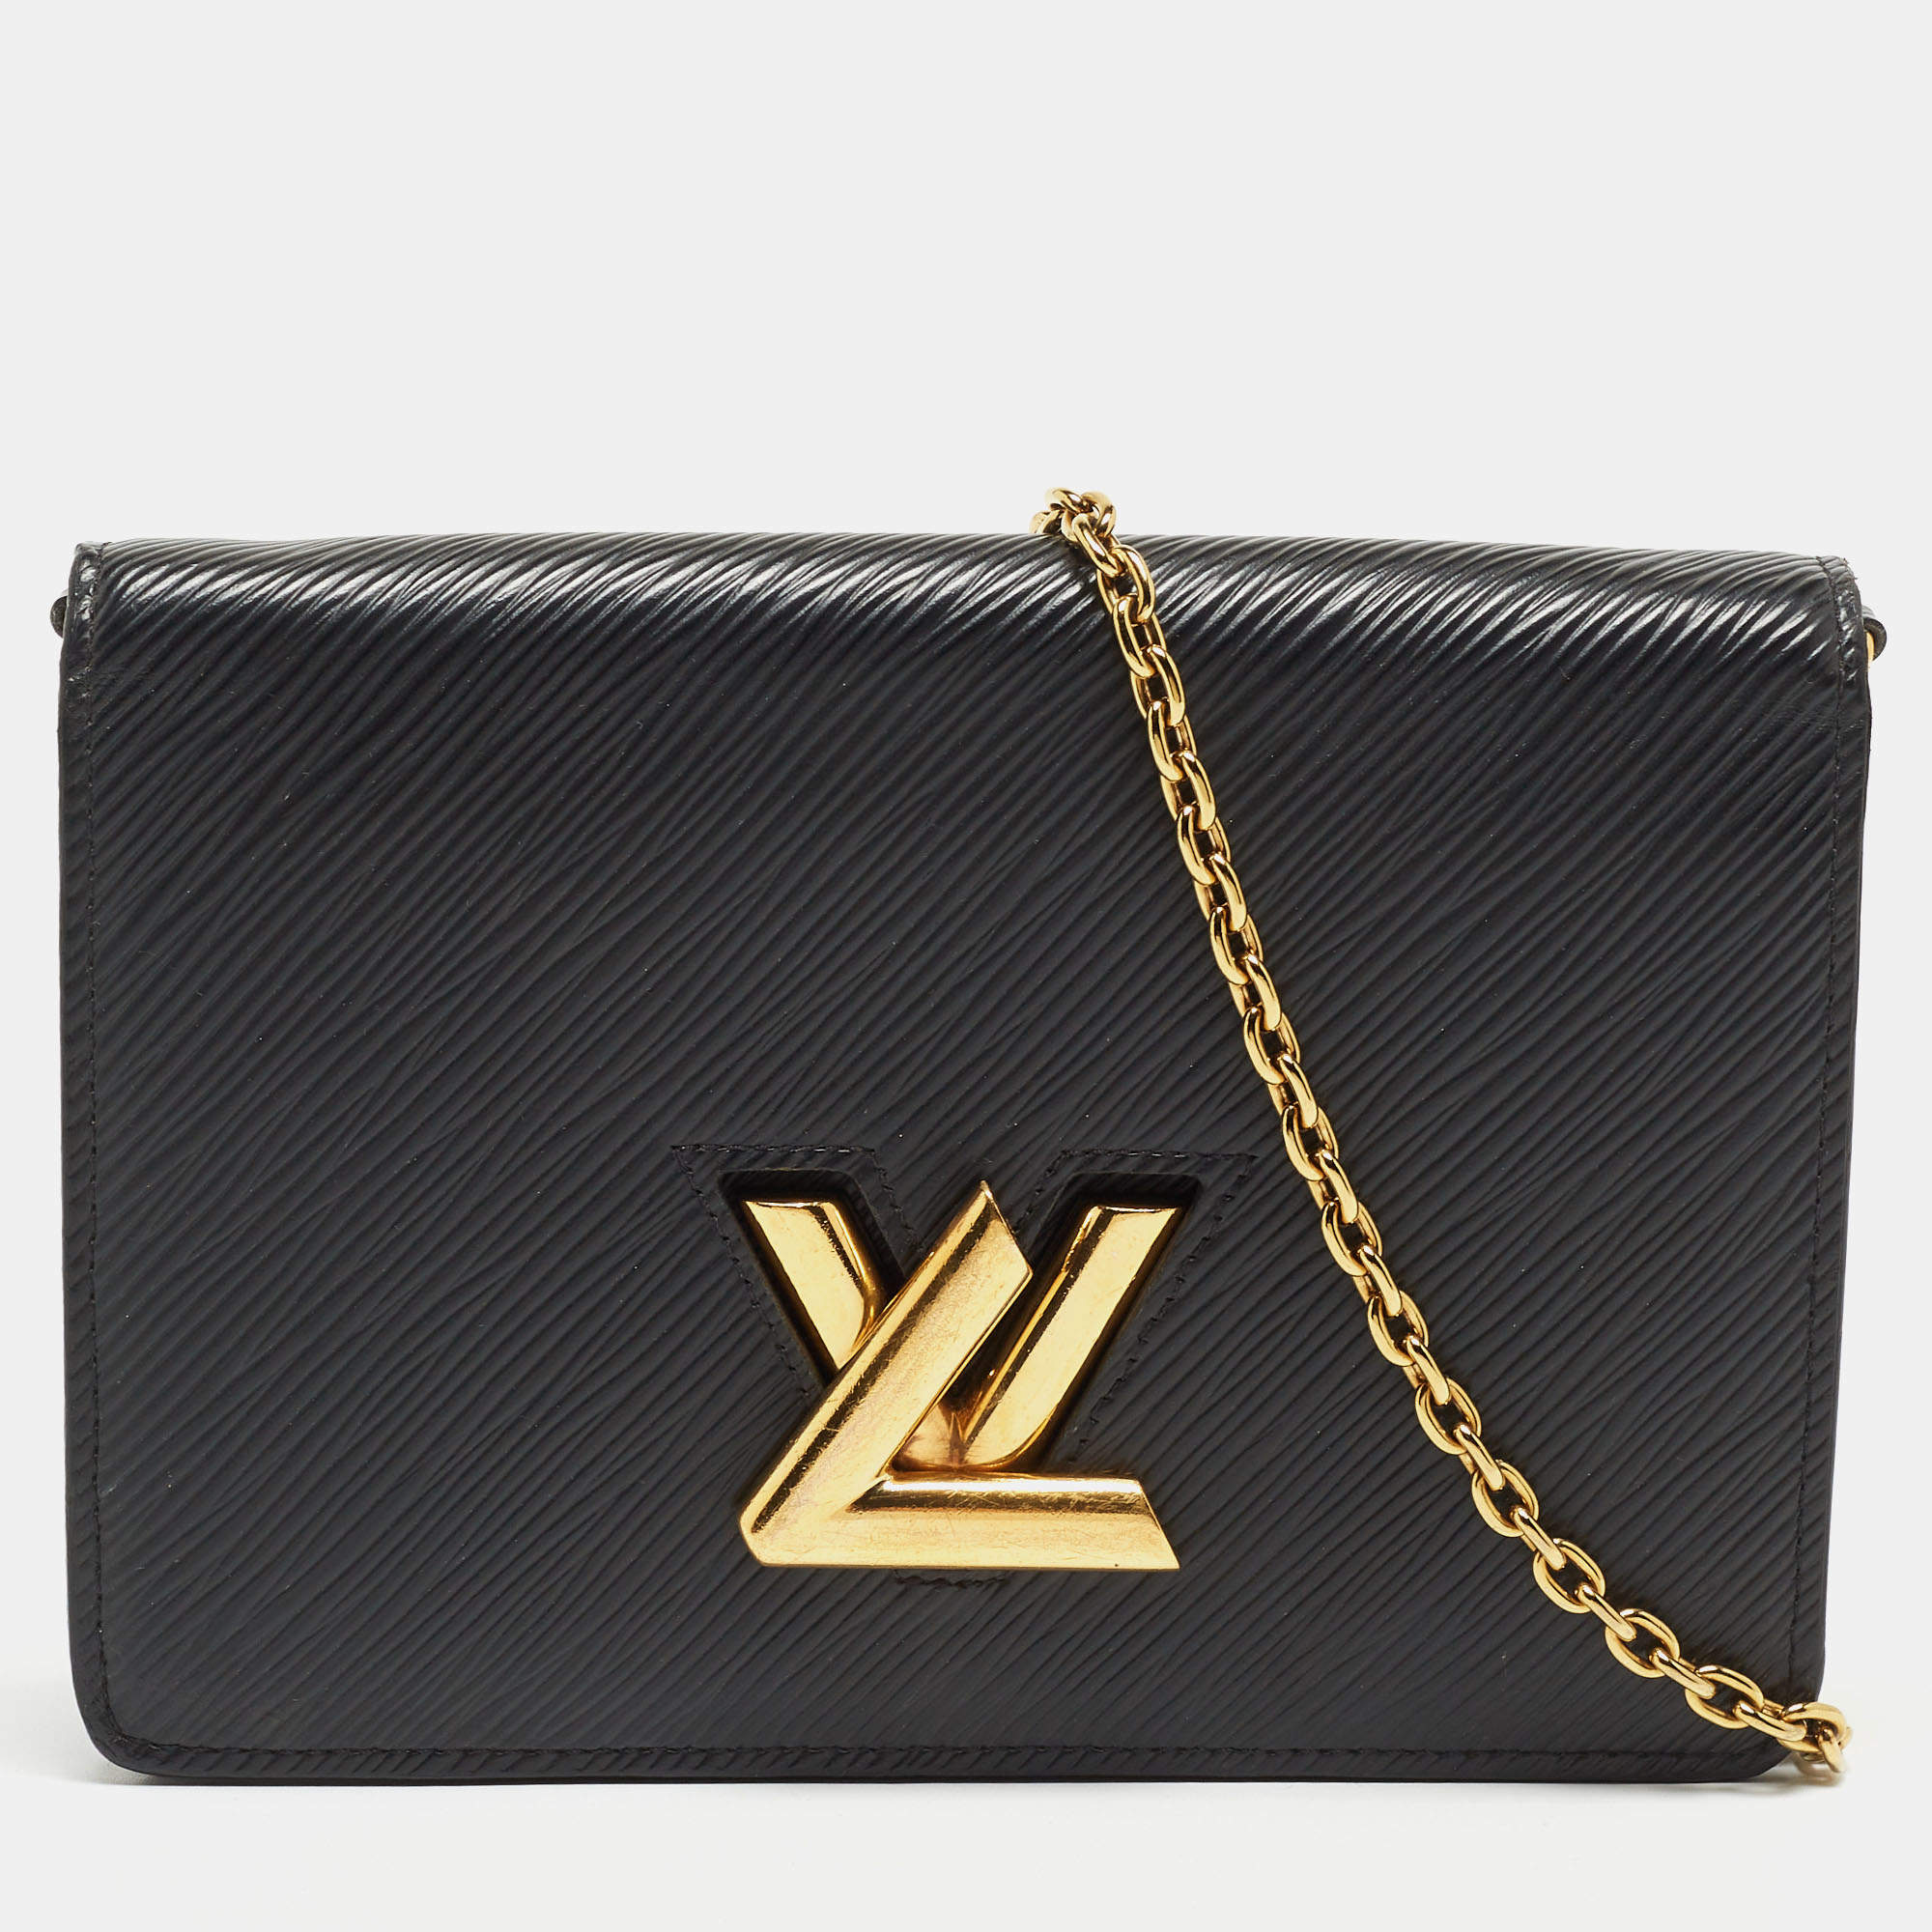 New Release! Louis Vuitton Twist Chain Wallet